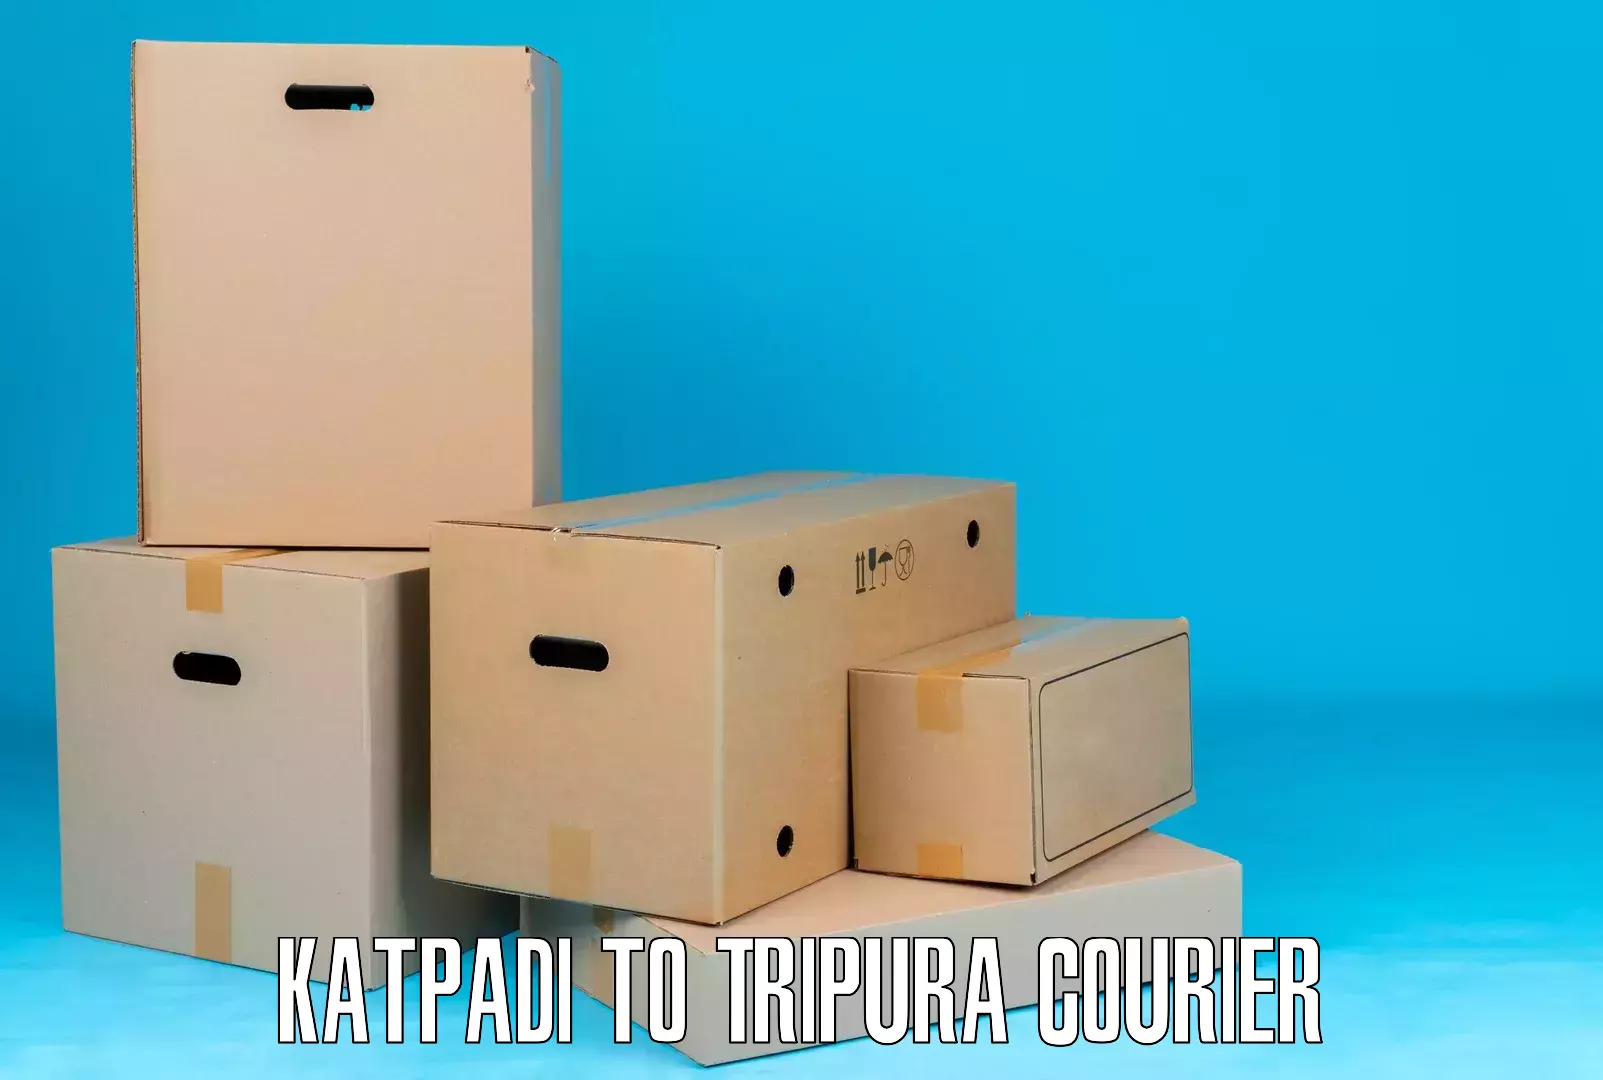 24-hour courier service Katpadi to West Tripura